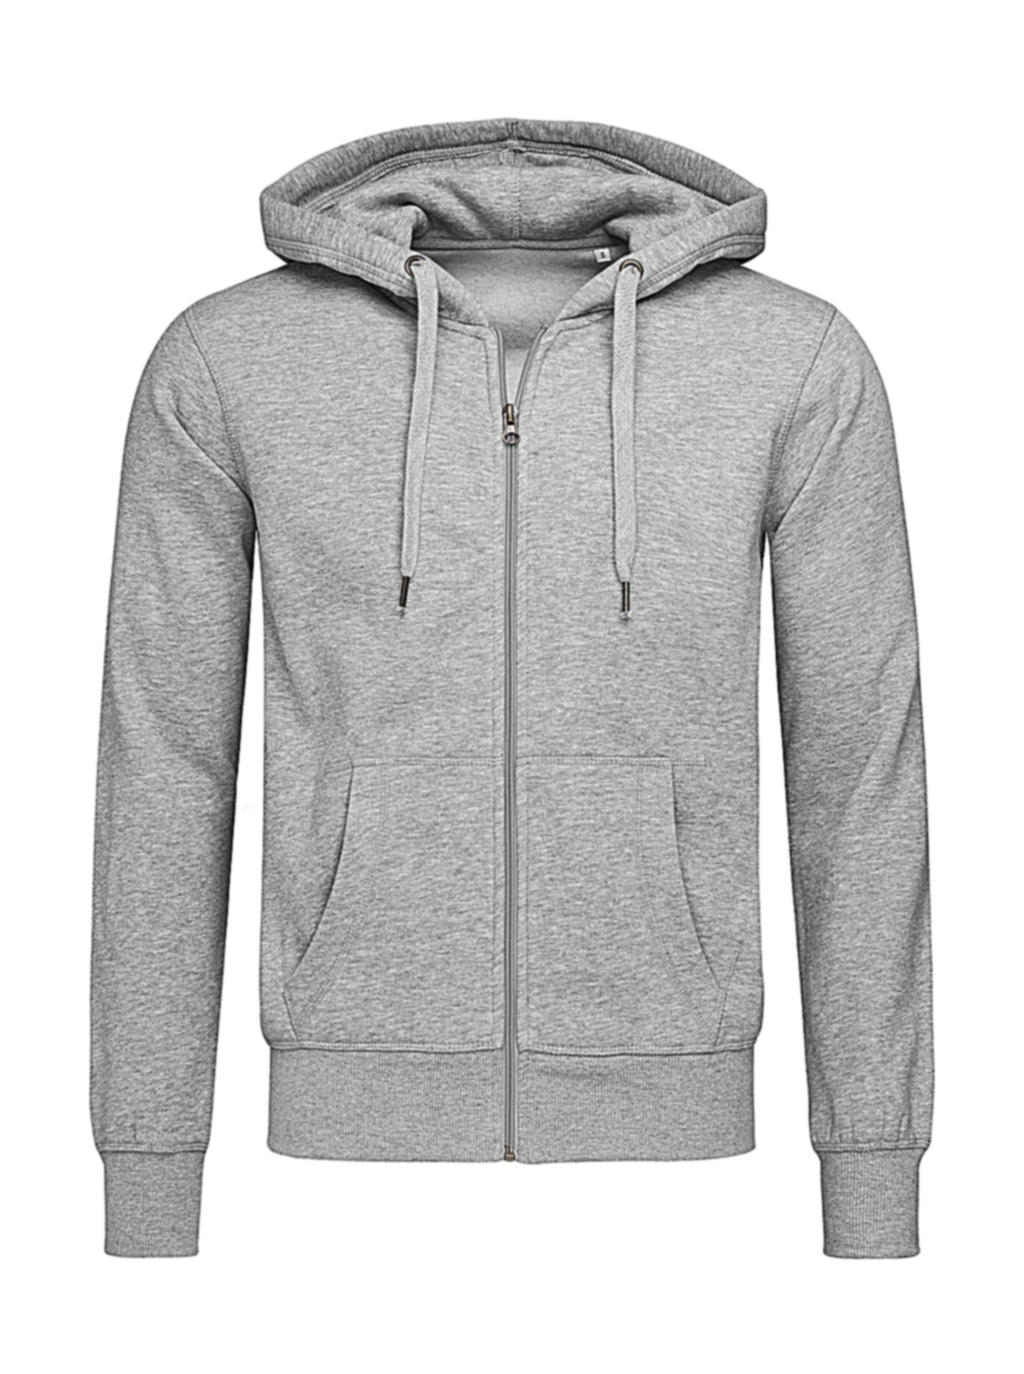 Sweat Jacket Select - grey heather